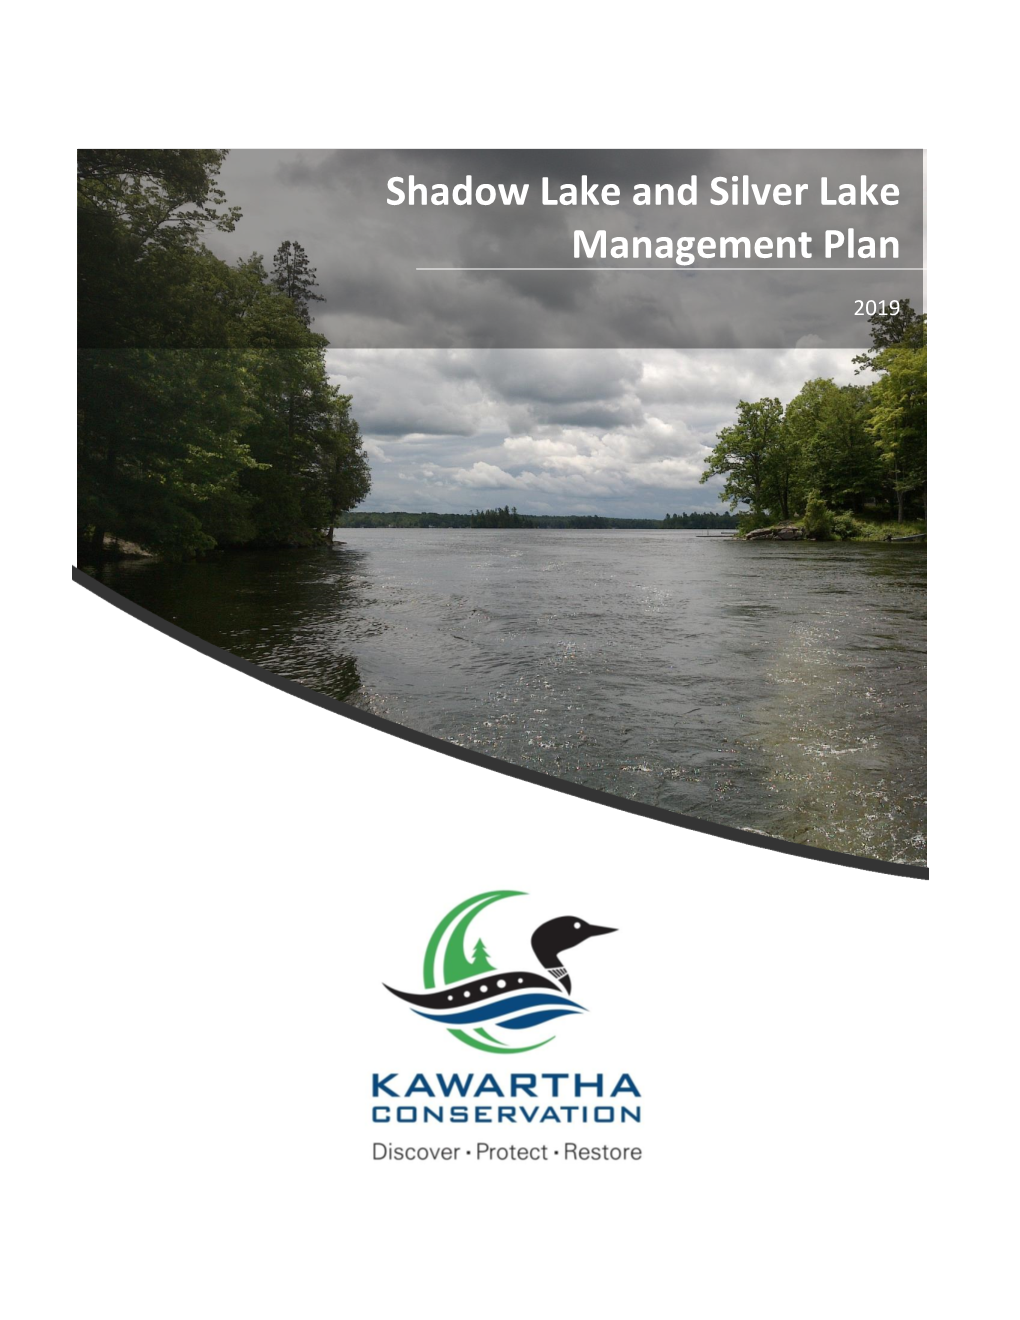 Shadow Lake and Silver Lake Management Plan